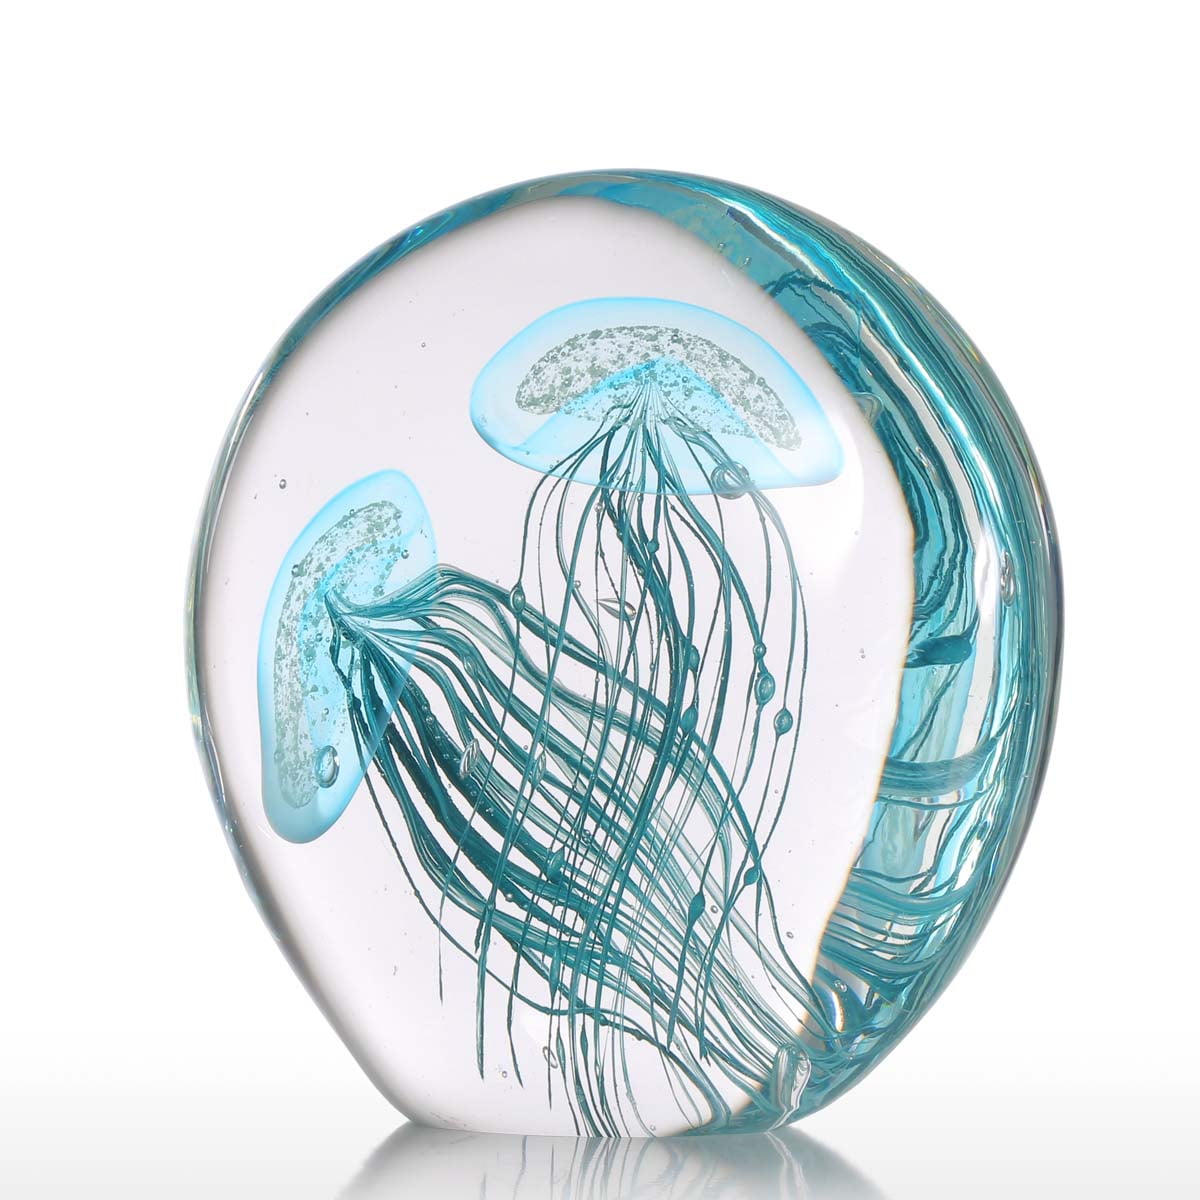 Tooarts Glass Jellyfish Gift Blue Ornament Animal Figurine Handblown Art Modern Ornaments for the Home